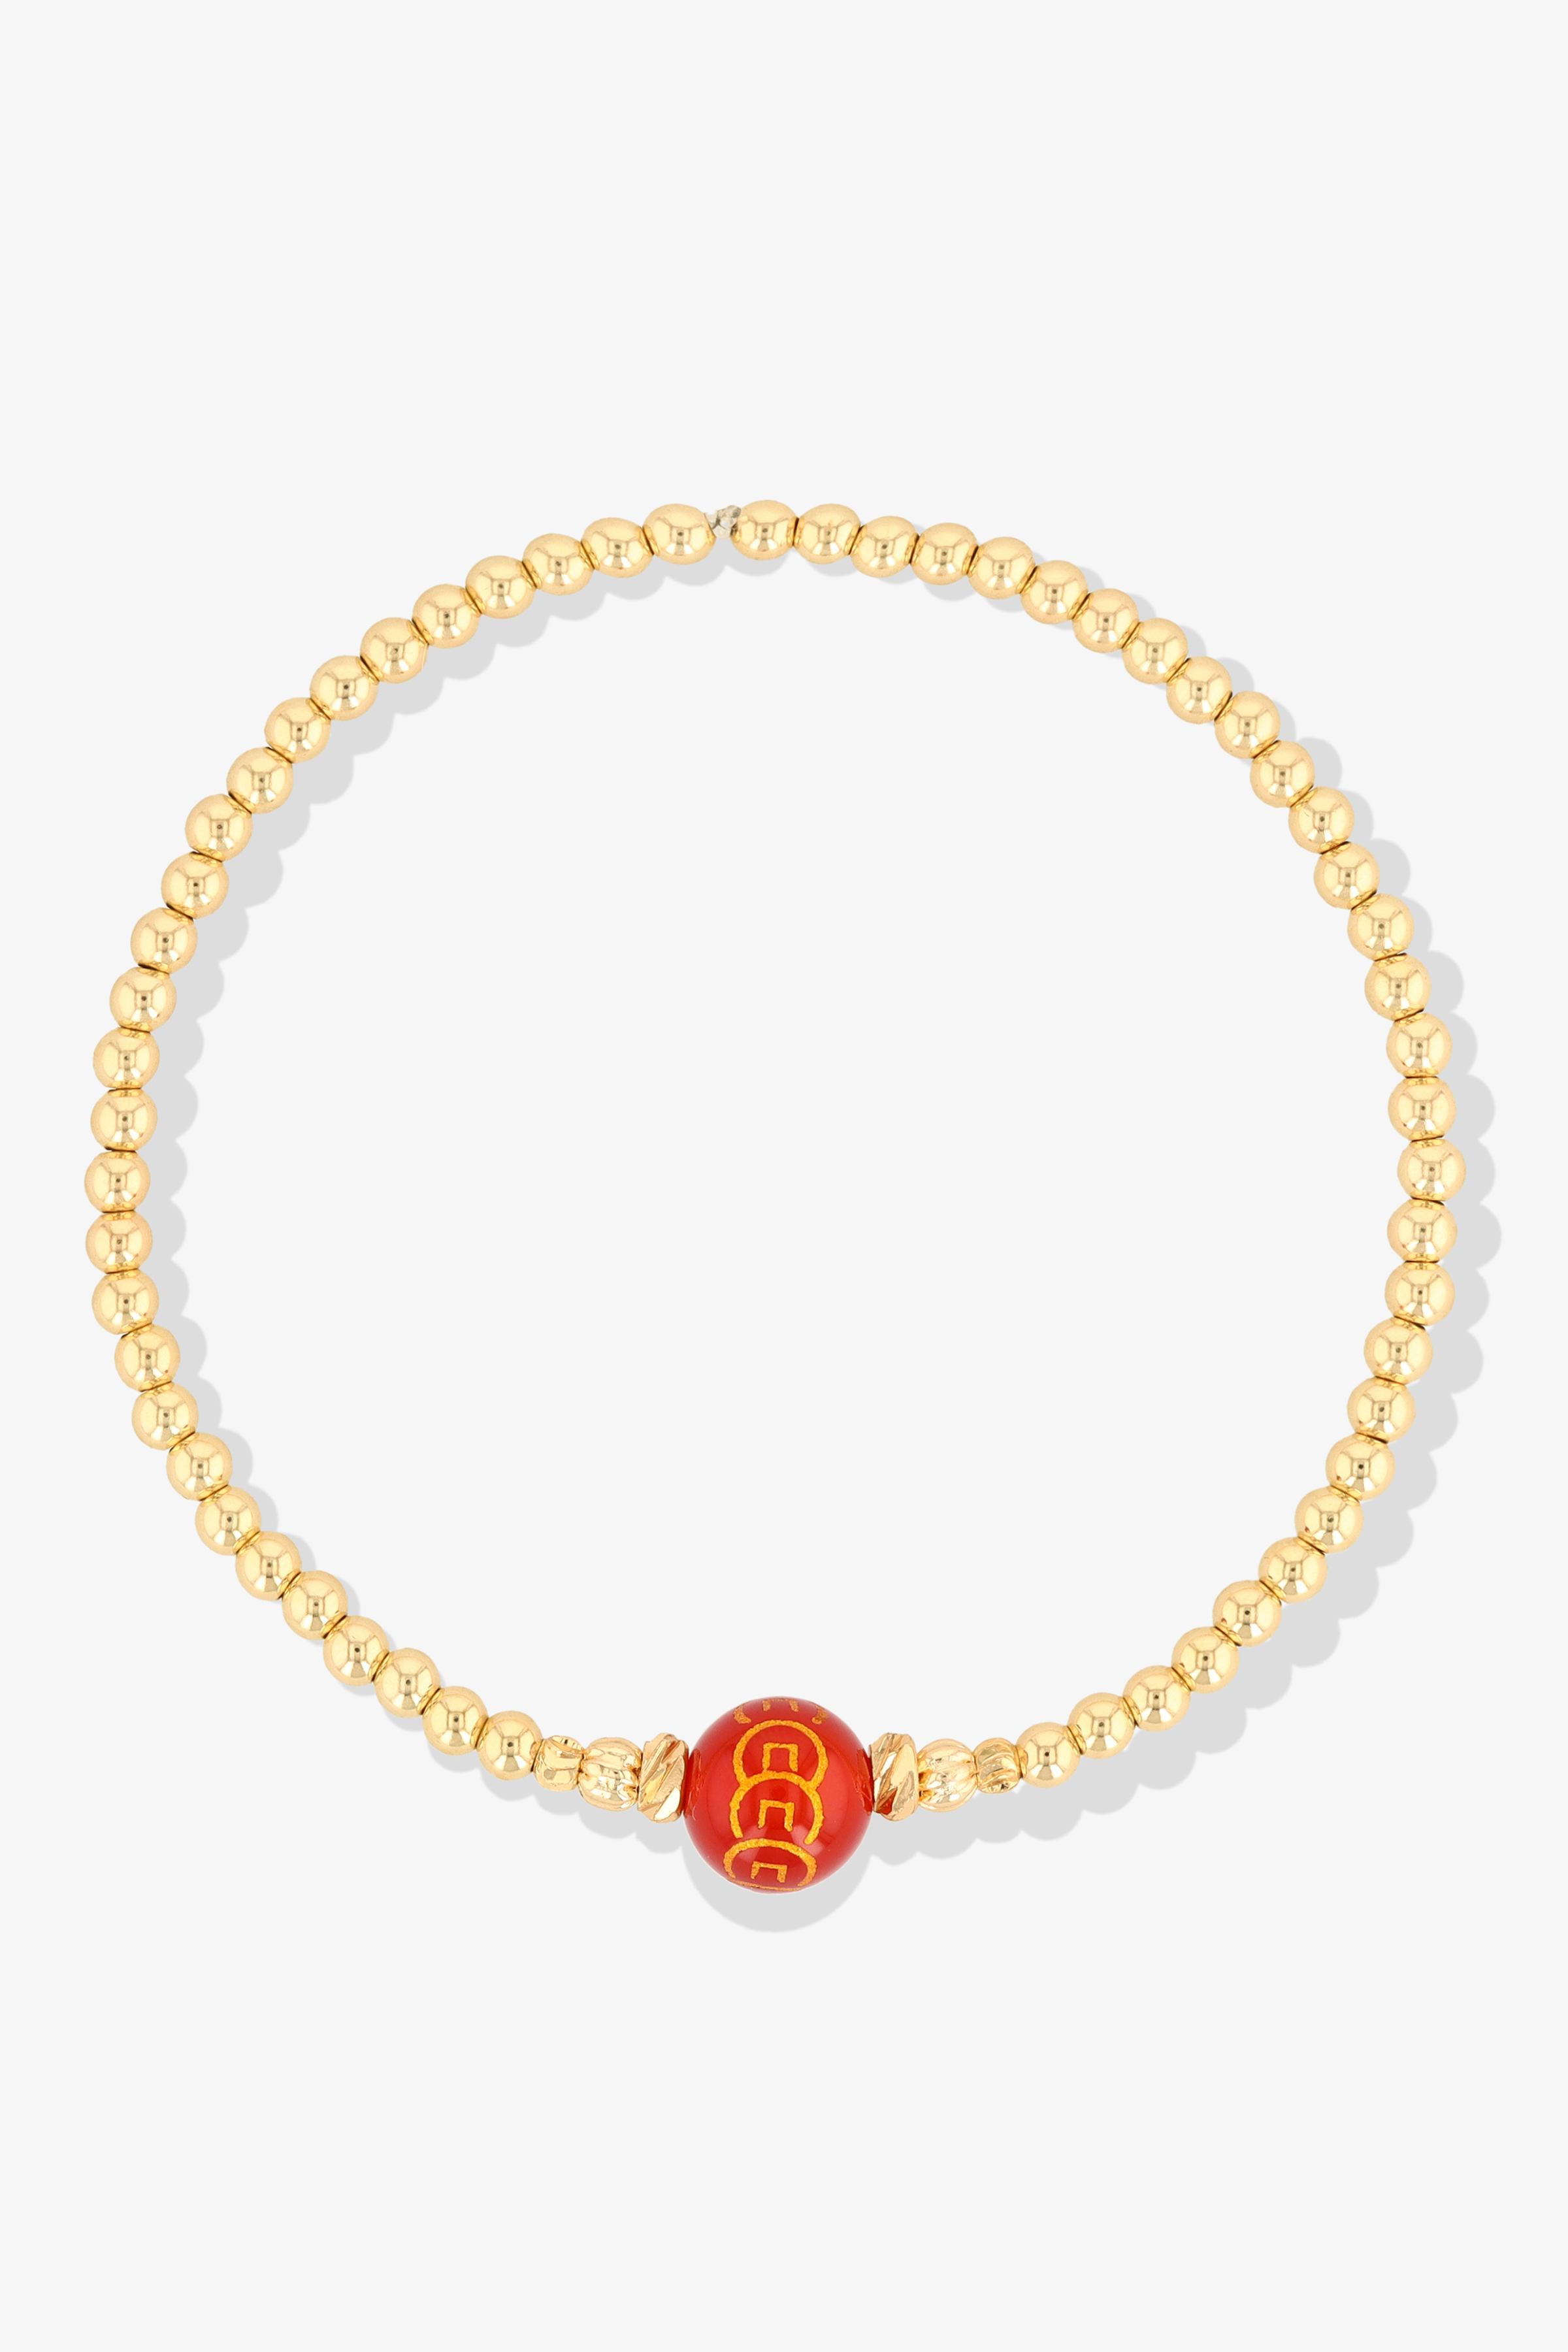 Ultimate Wealth 14K Gold Coins Feng Shui Bracelet REAL Gold - Red Agate